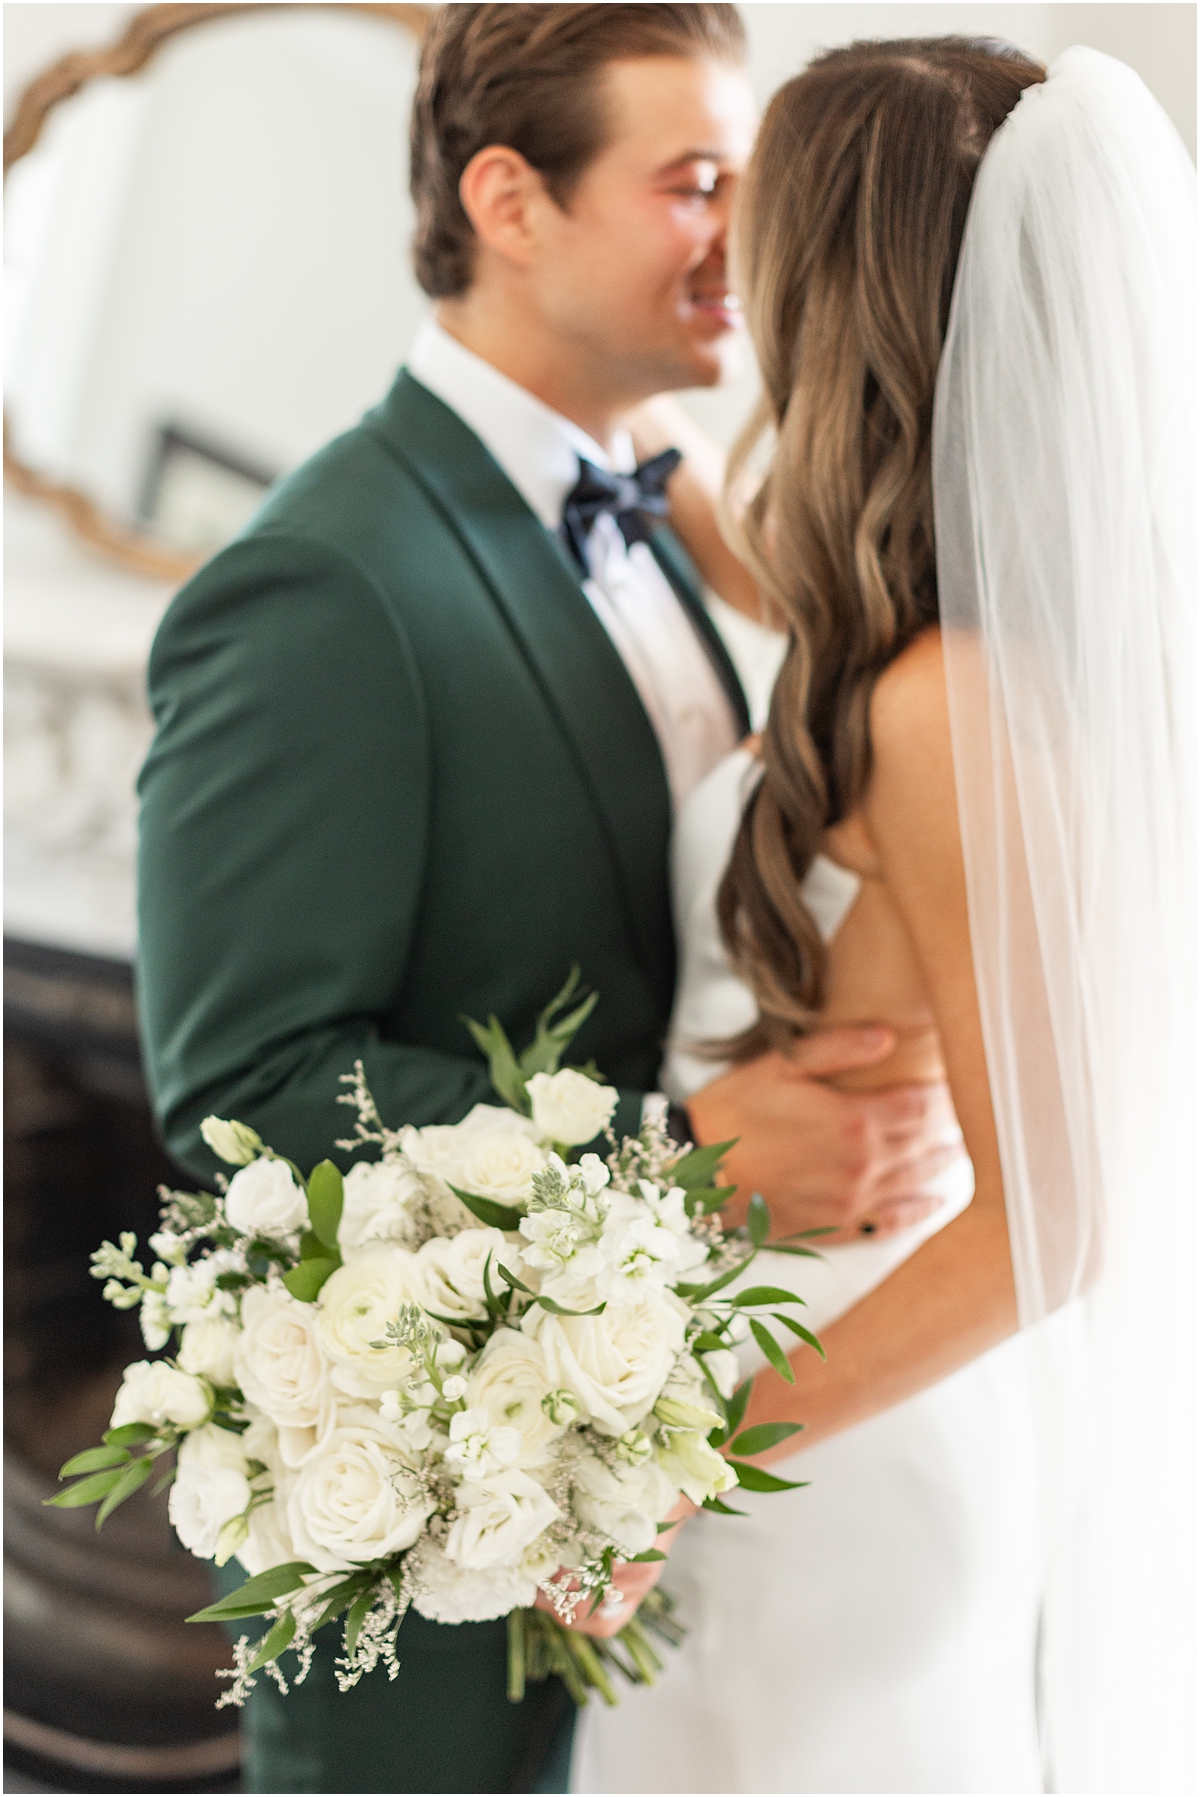 classic and elegant bridal bouquet